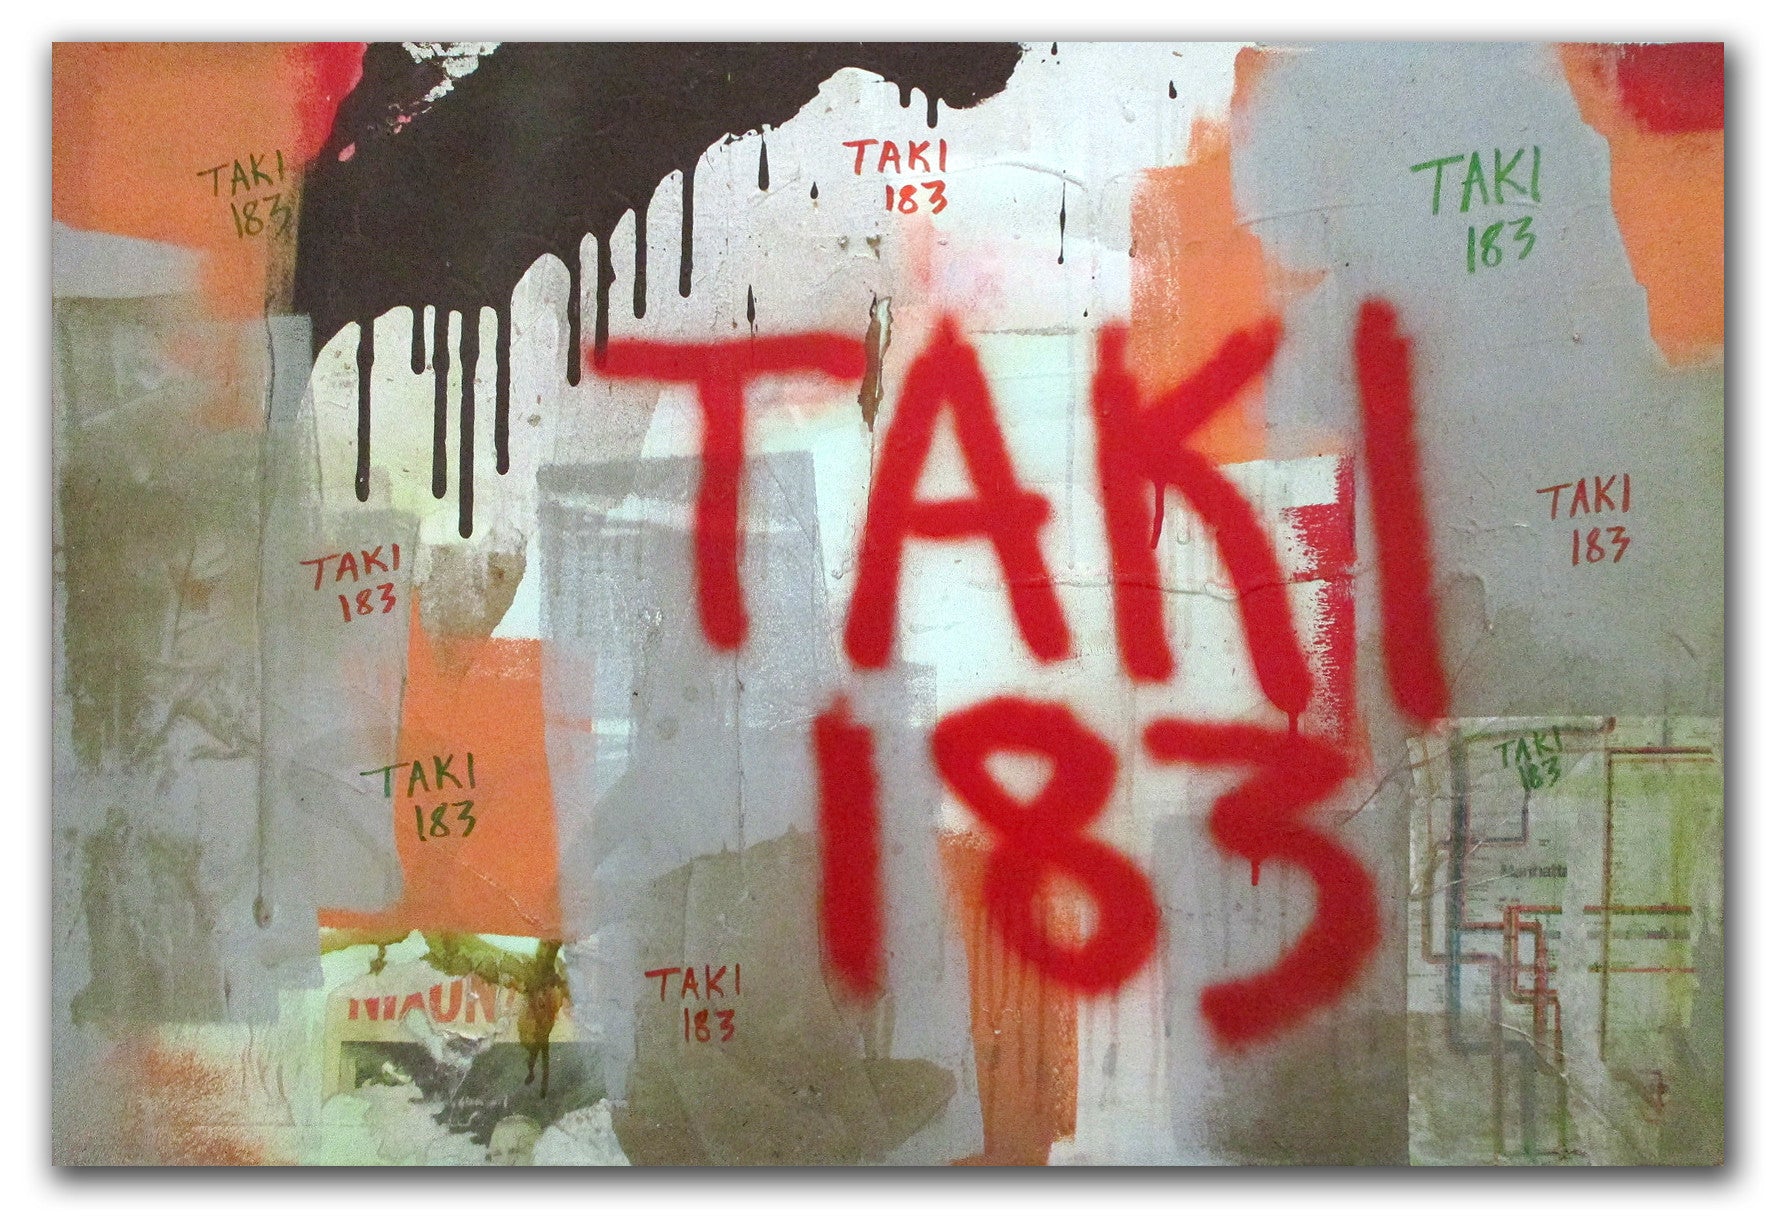 TAKI-183  "Collage 16" on canvas